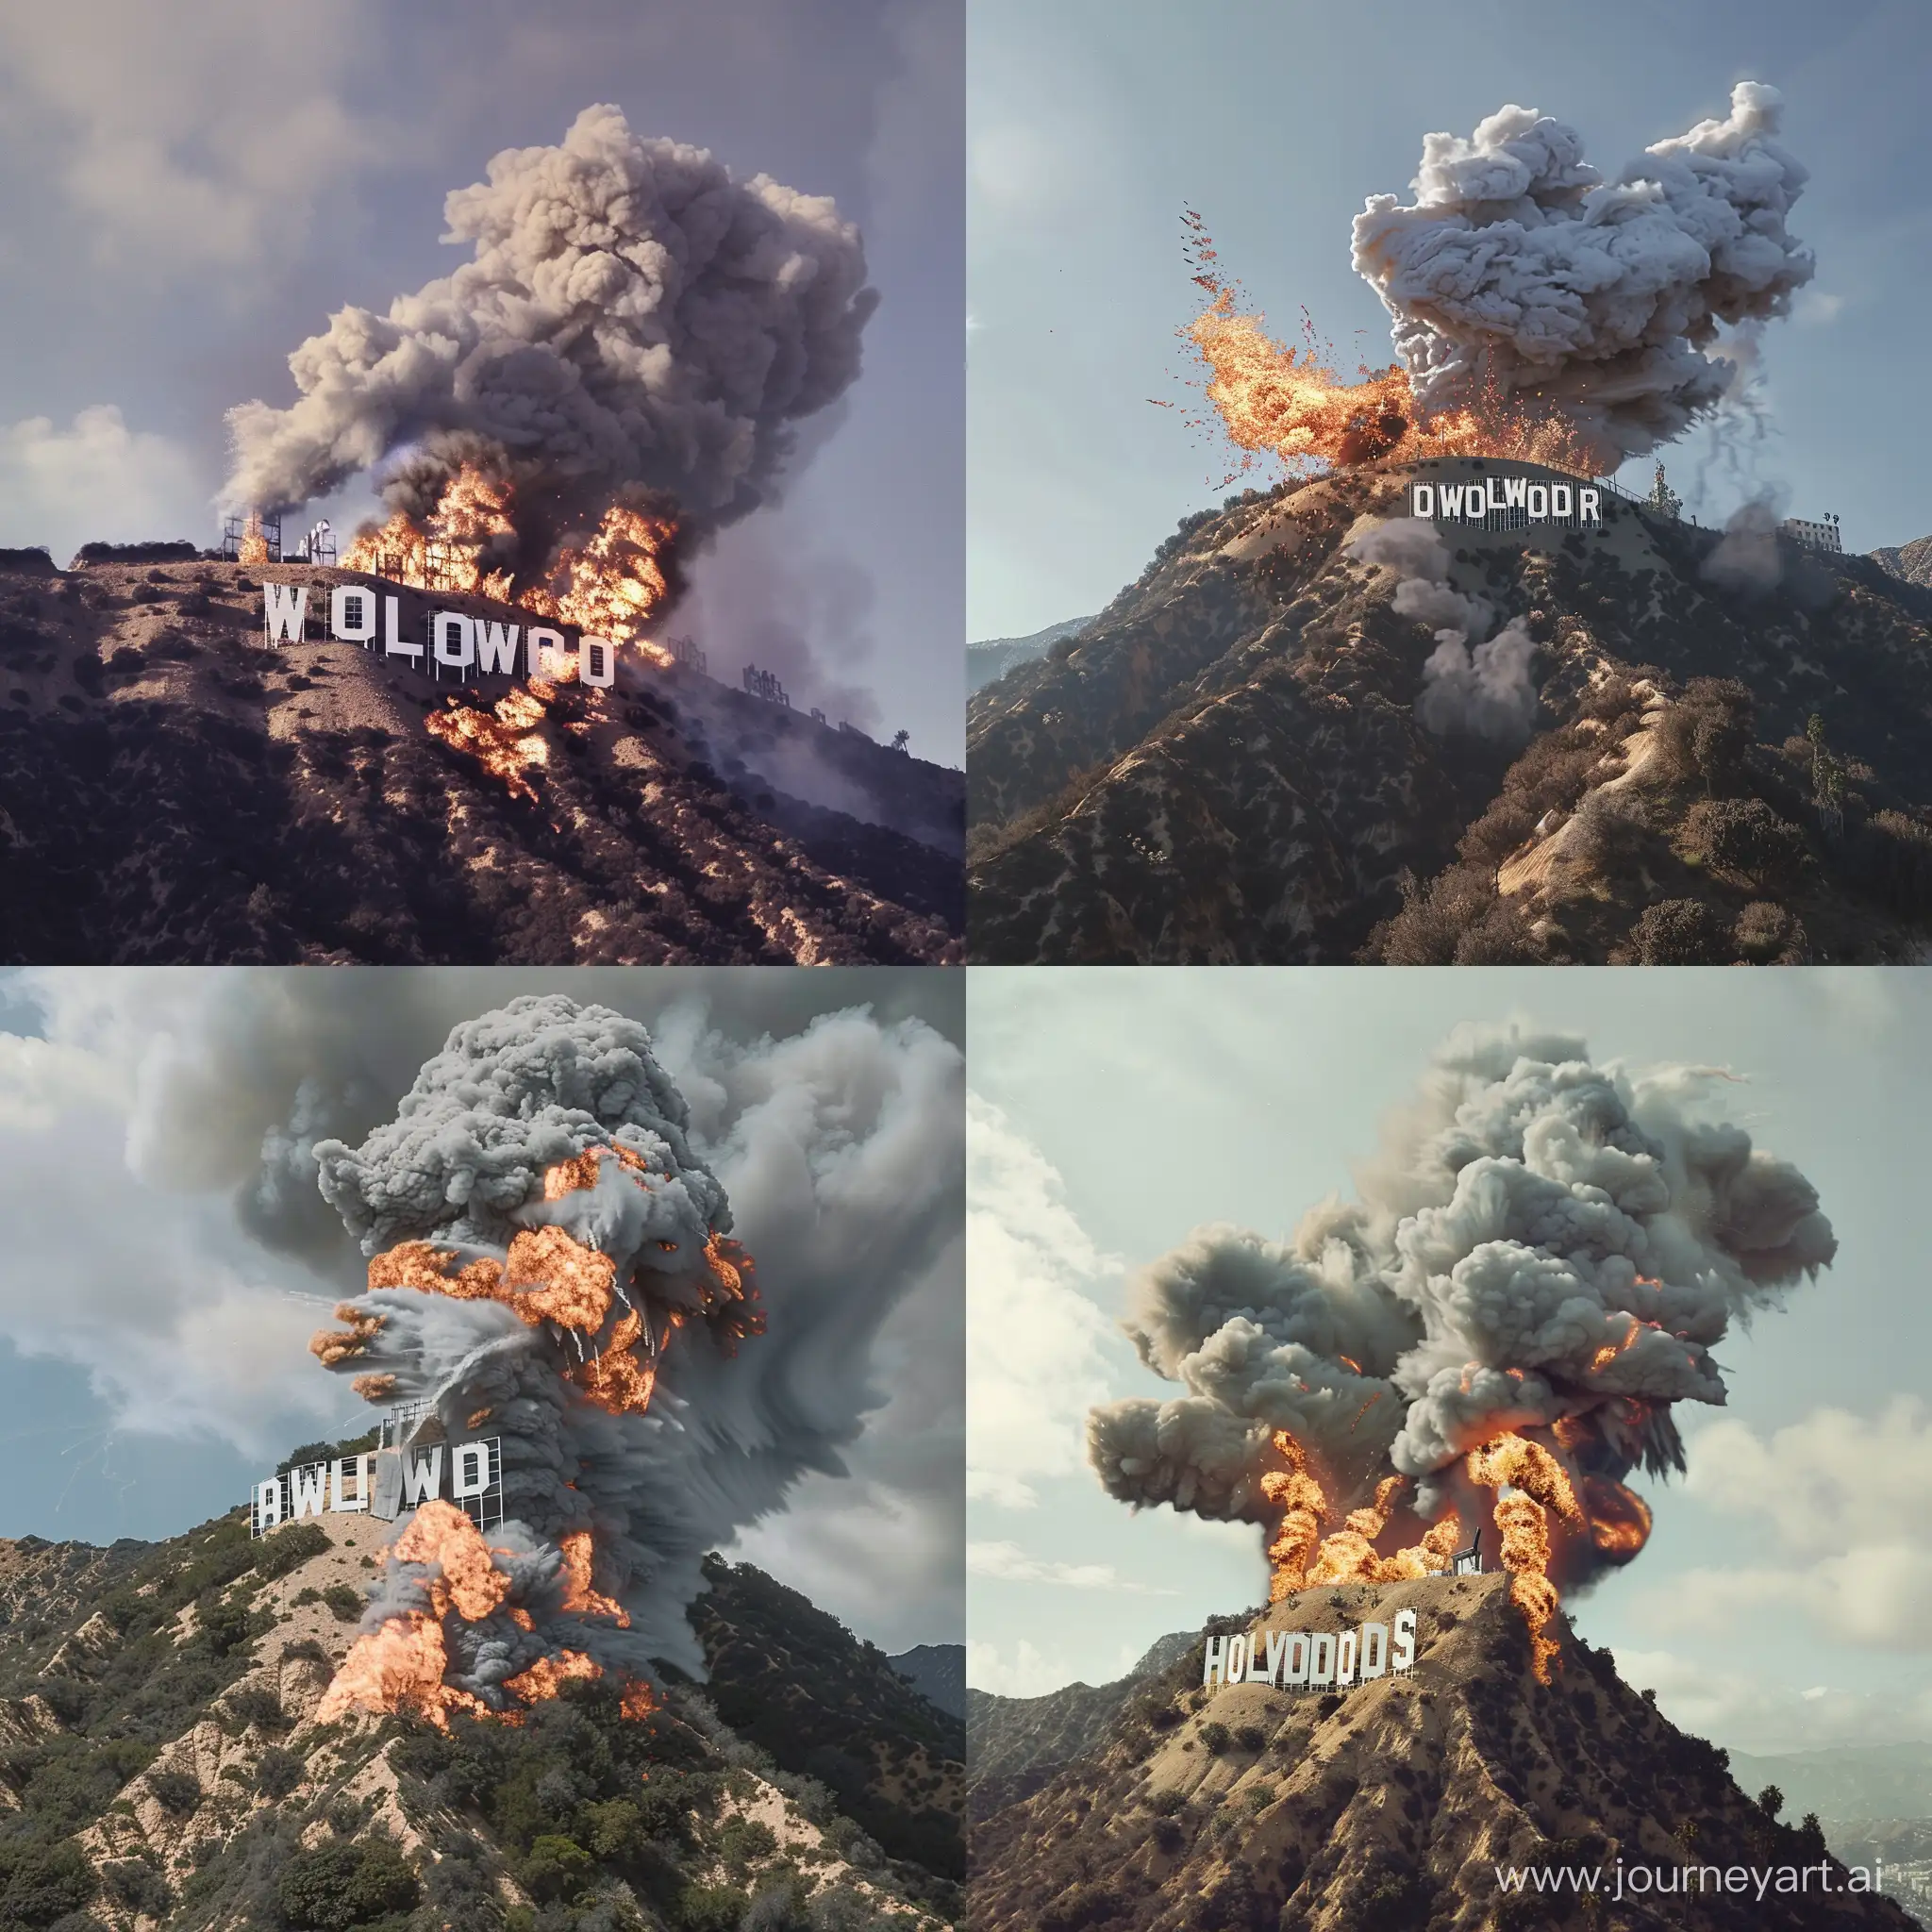 Explosive-Hollywood-Sign-Blaze-on-Mountain-Peak